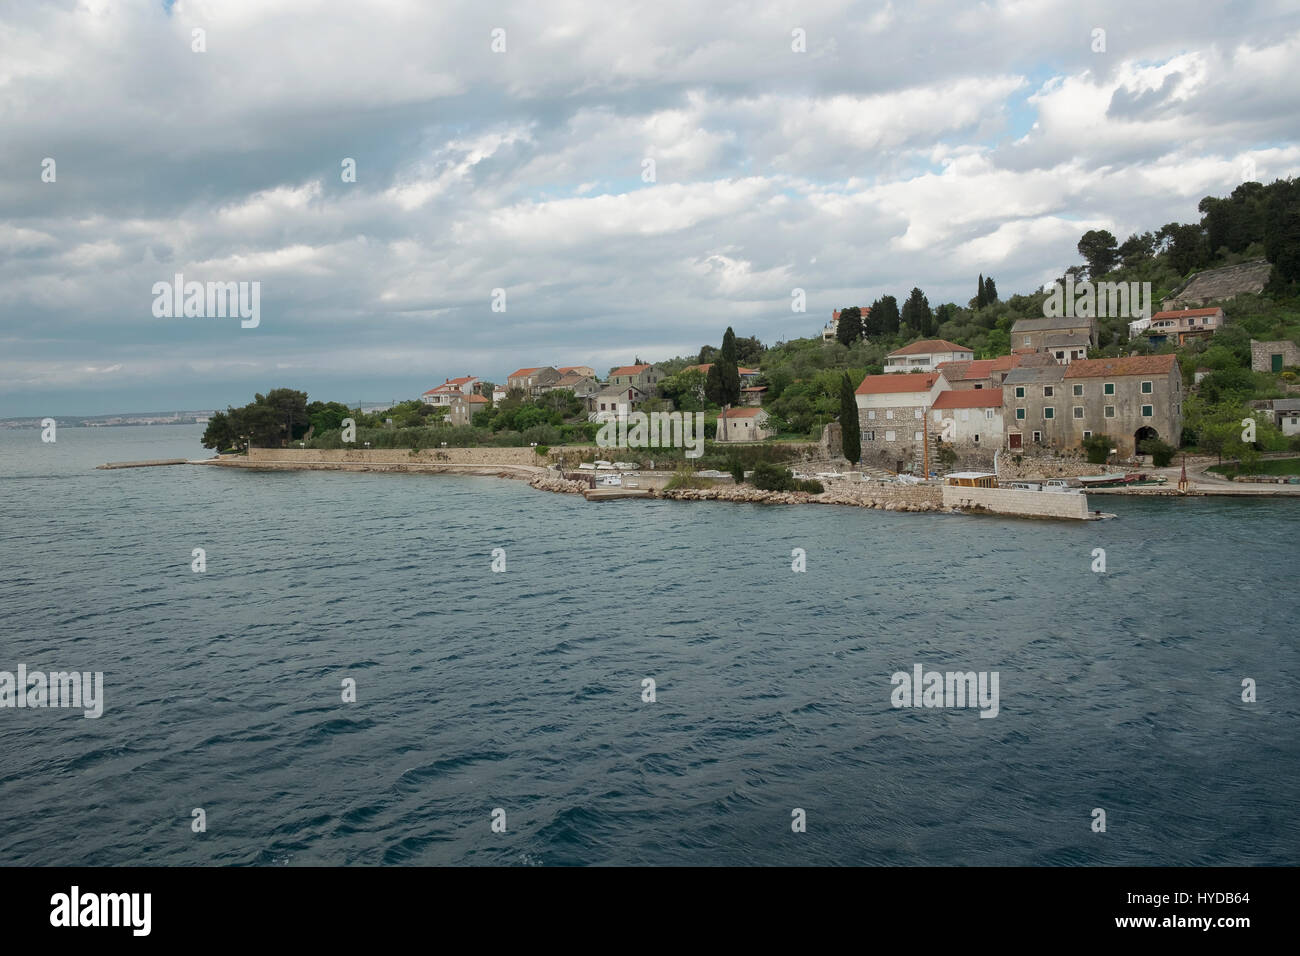 Croatia, Small town by sea Stock Photo